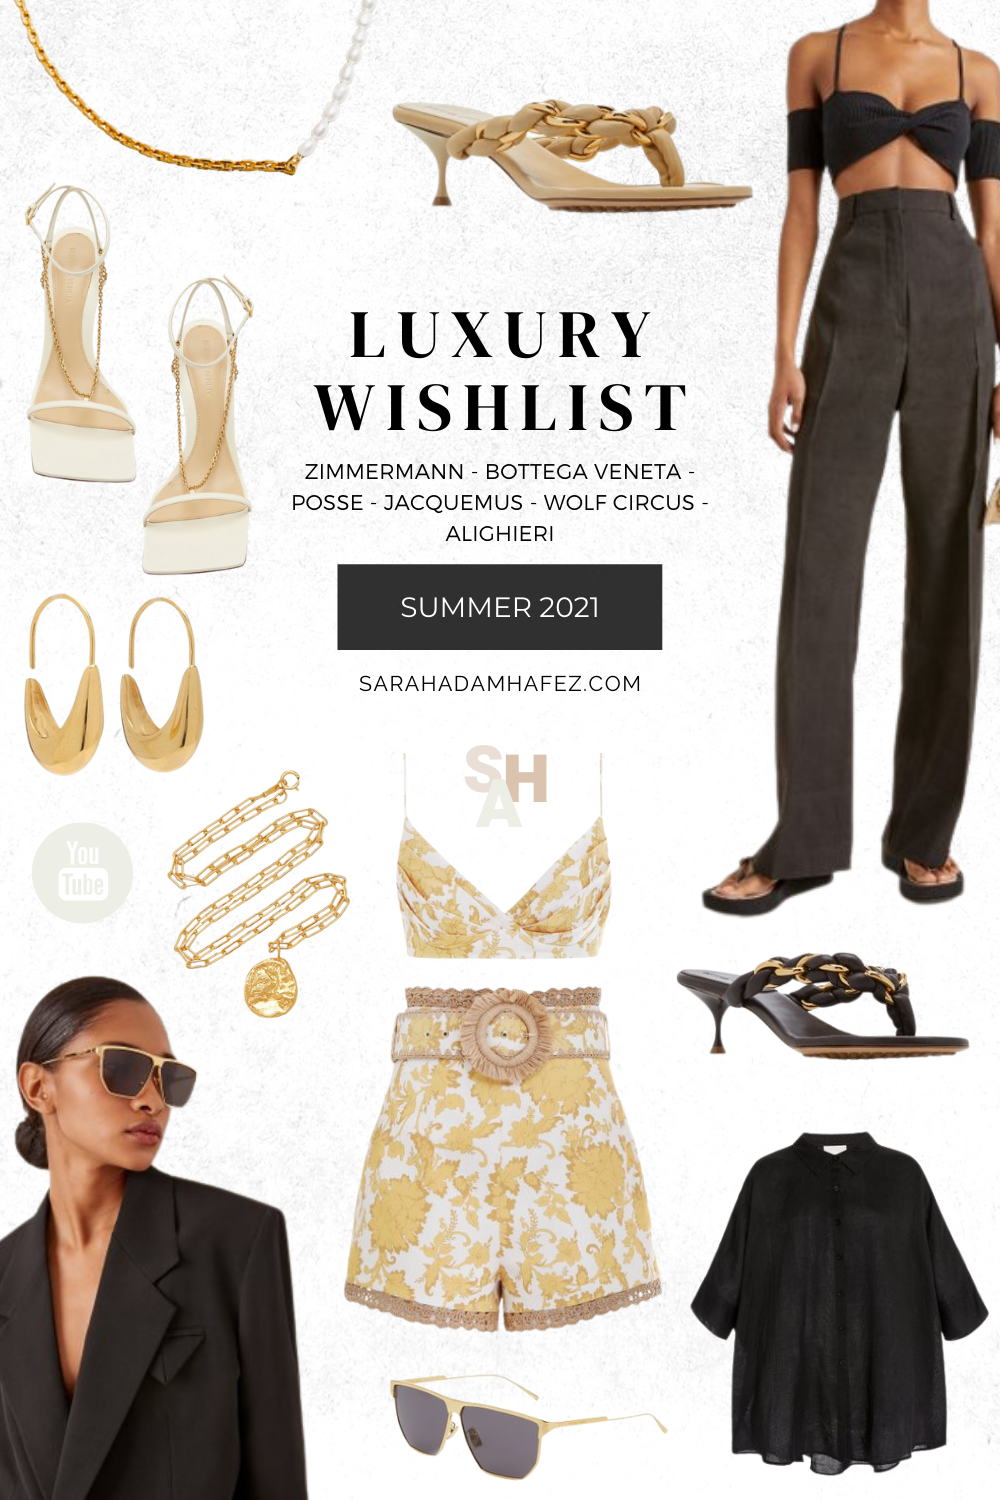 luxury wishlist 2021, luxury wishlist, luxury lifestyle, birthday wishlist luxury, sarah adam hafez